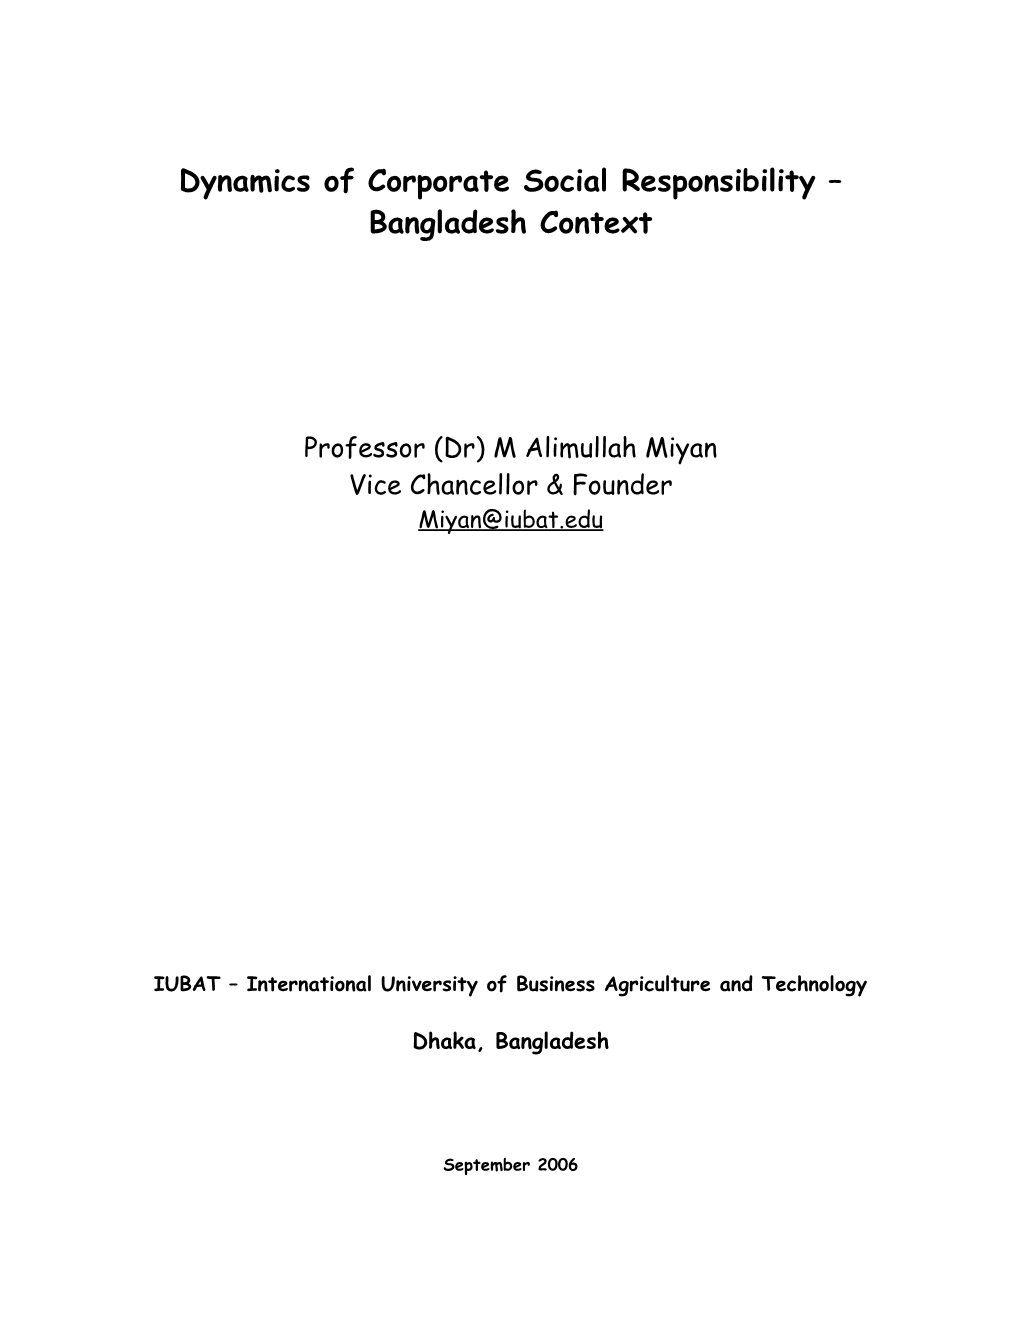 Dynamics of Corporate Social Responsibility: a Bangladeshi Context